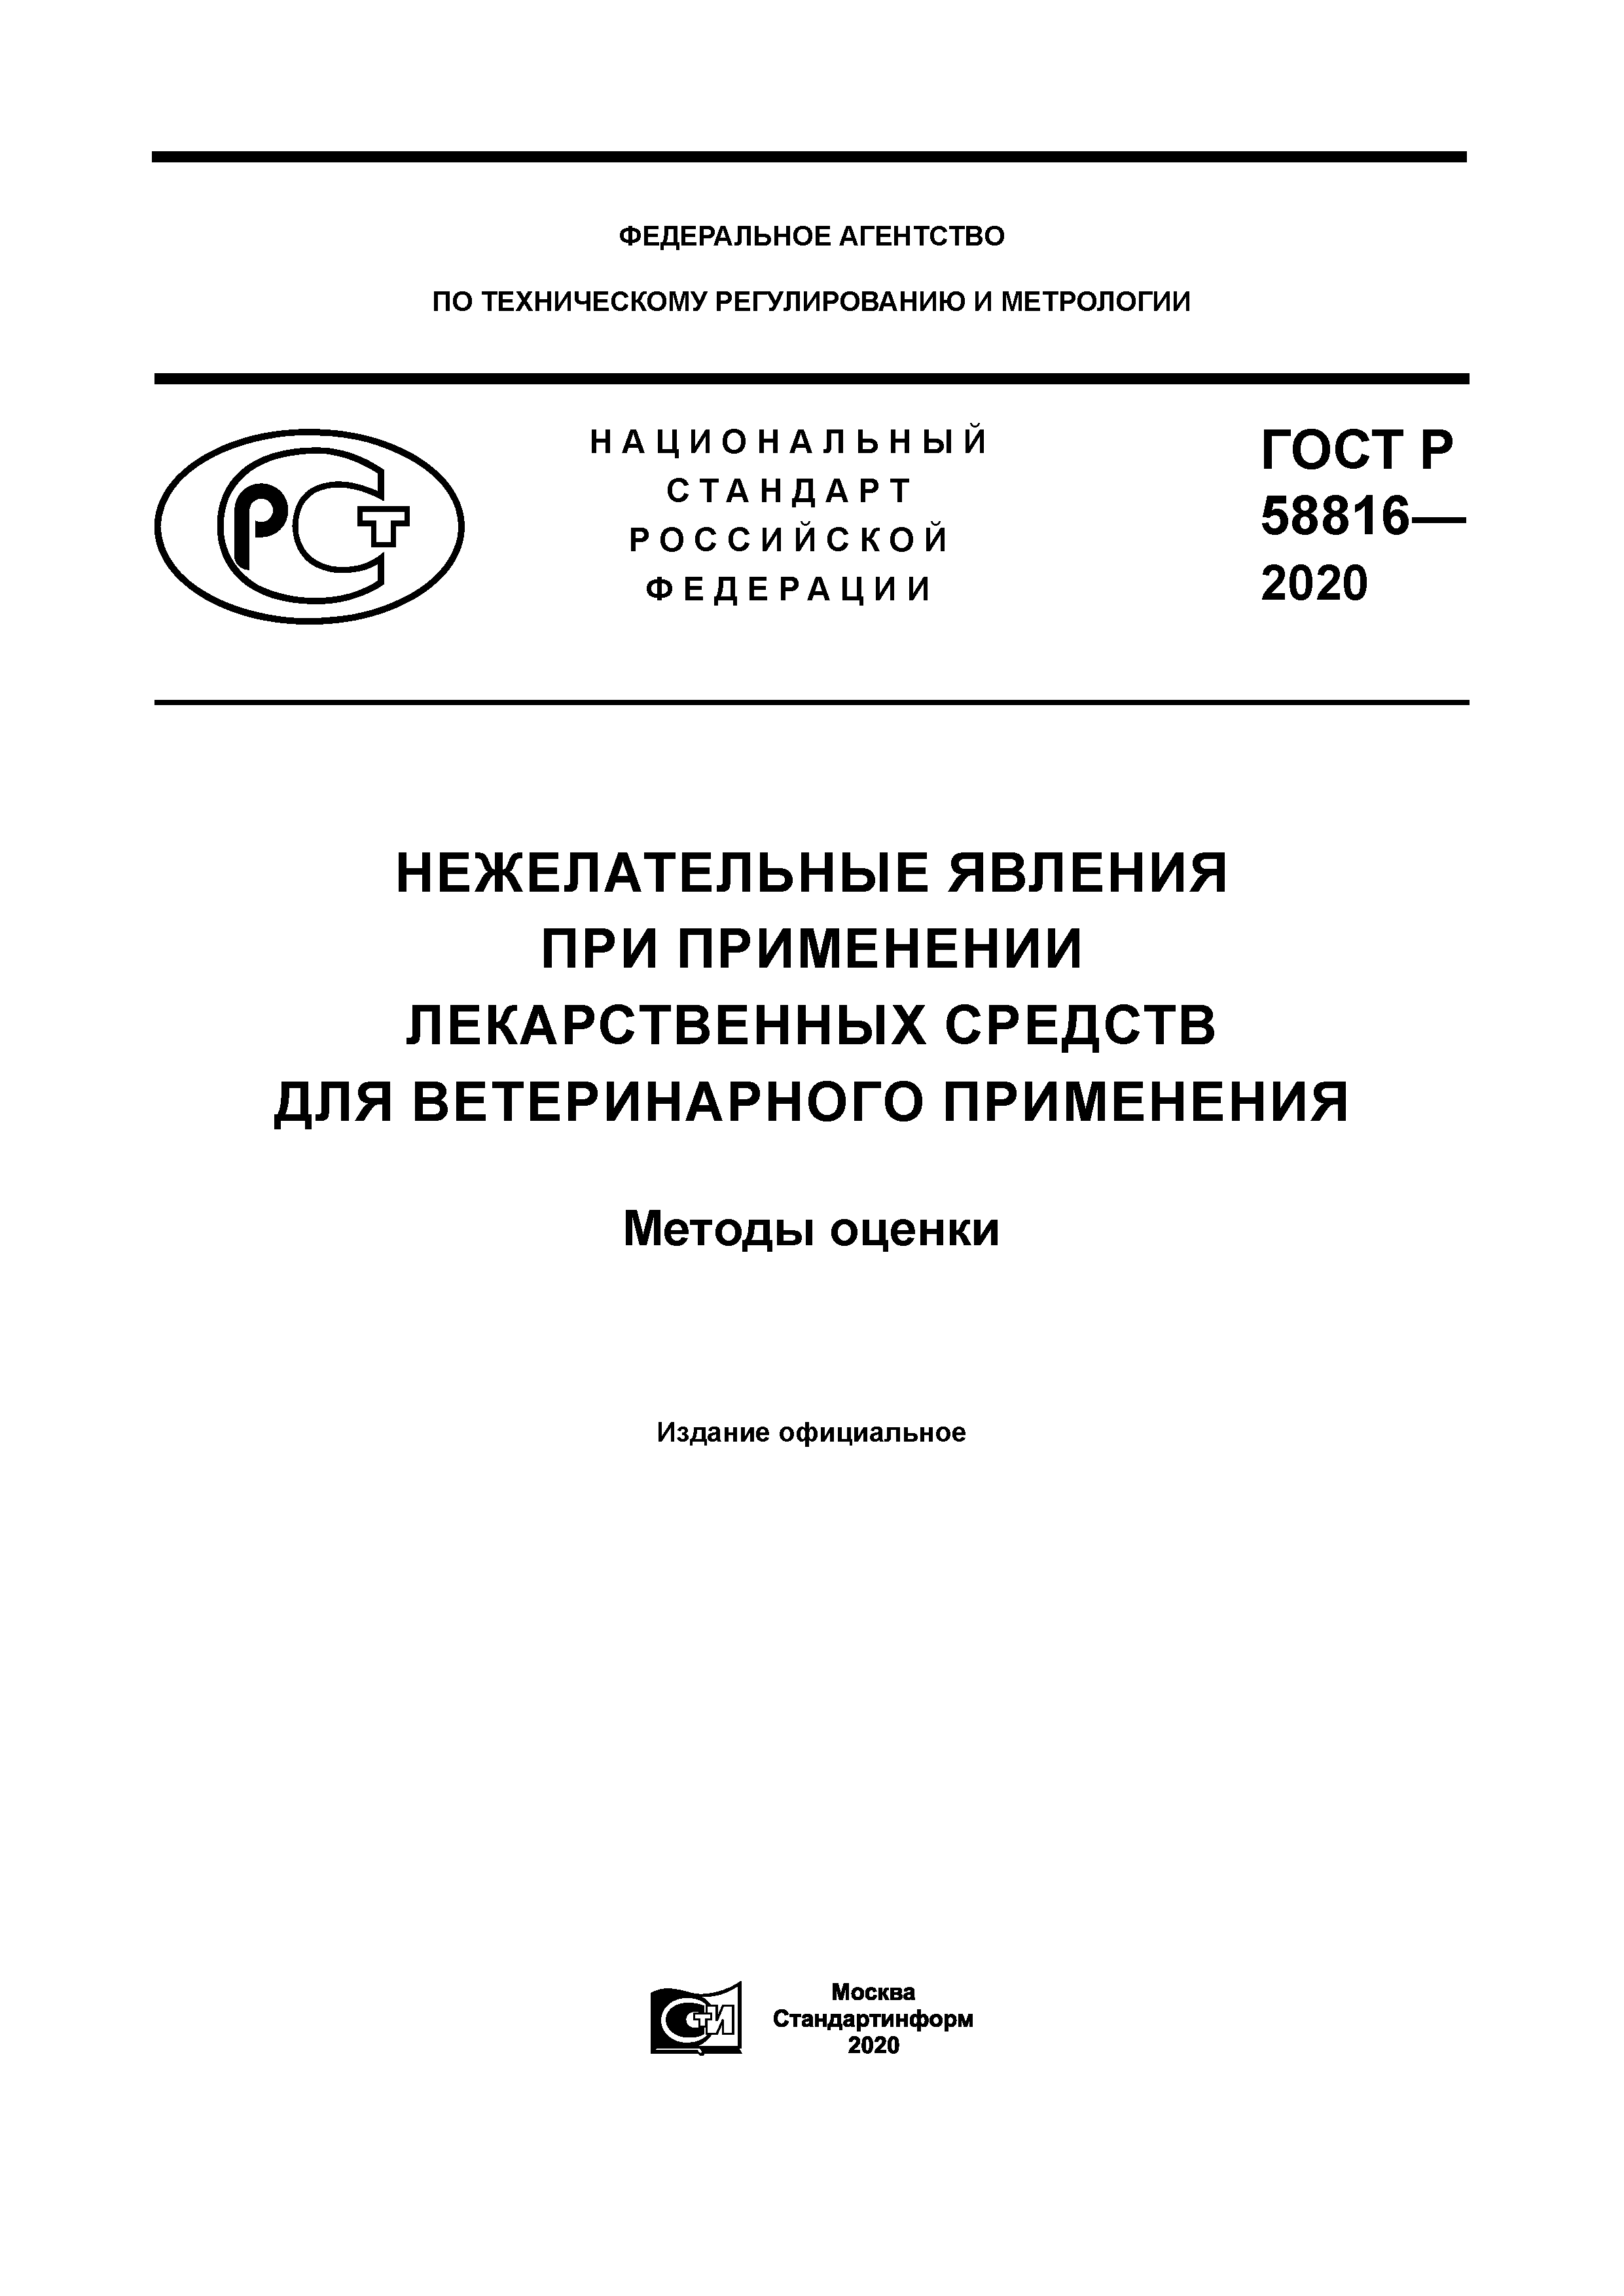 ГОСТ Р 58816-2020